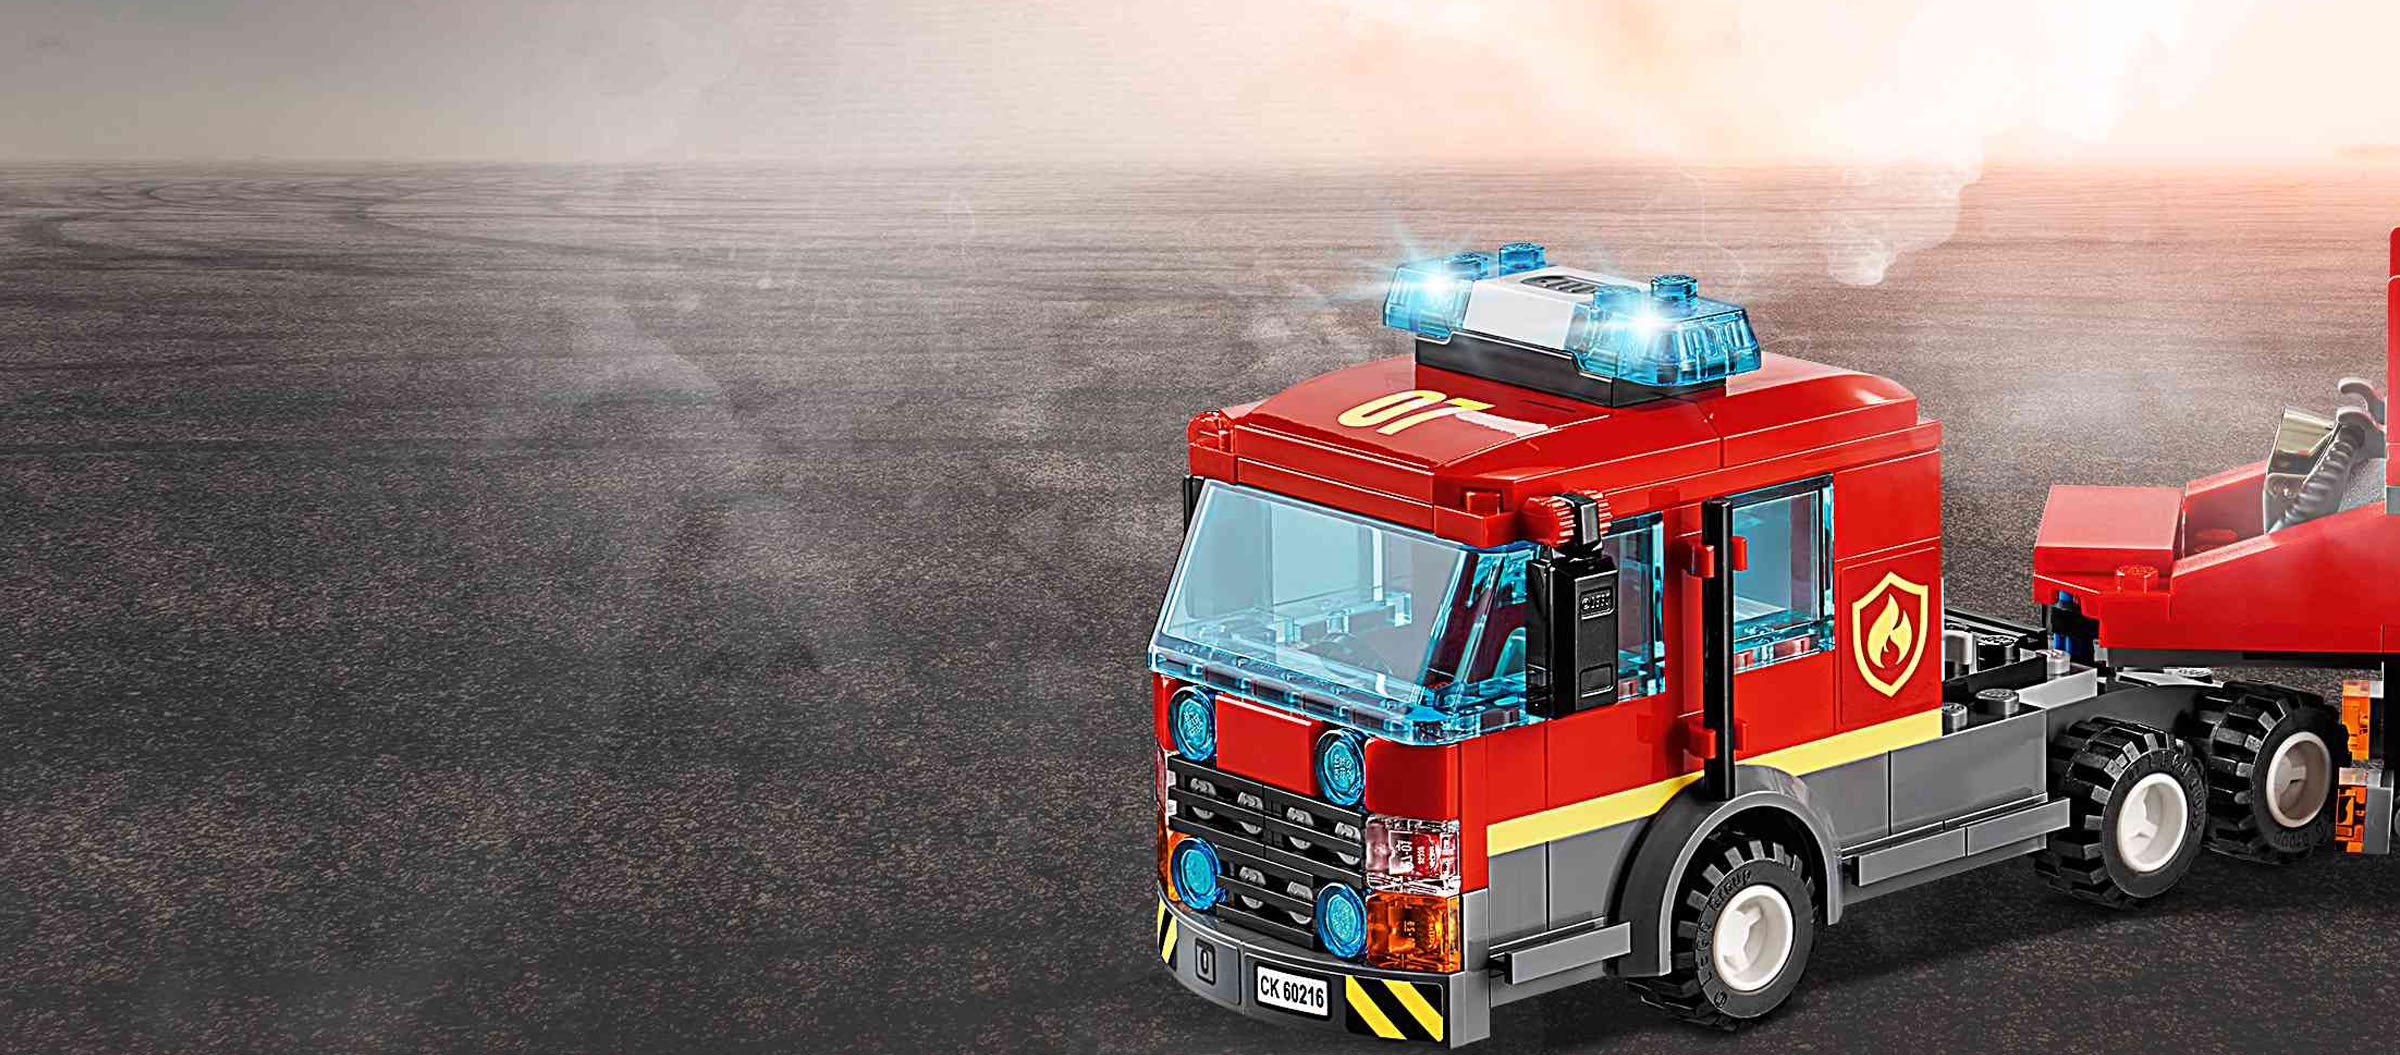 lego movie fire truck